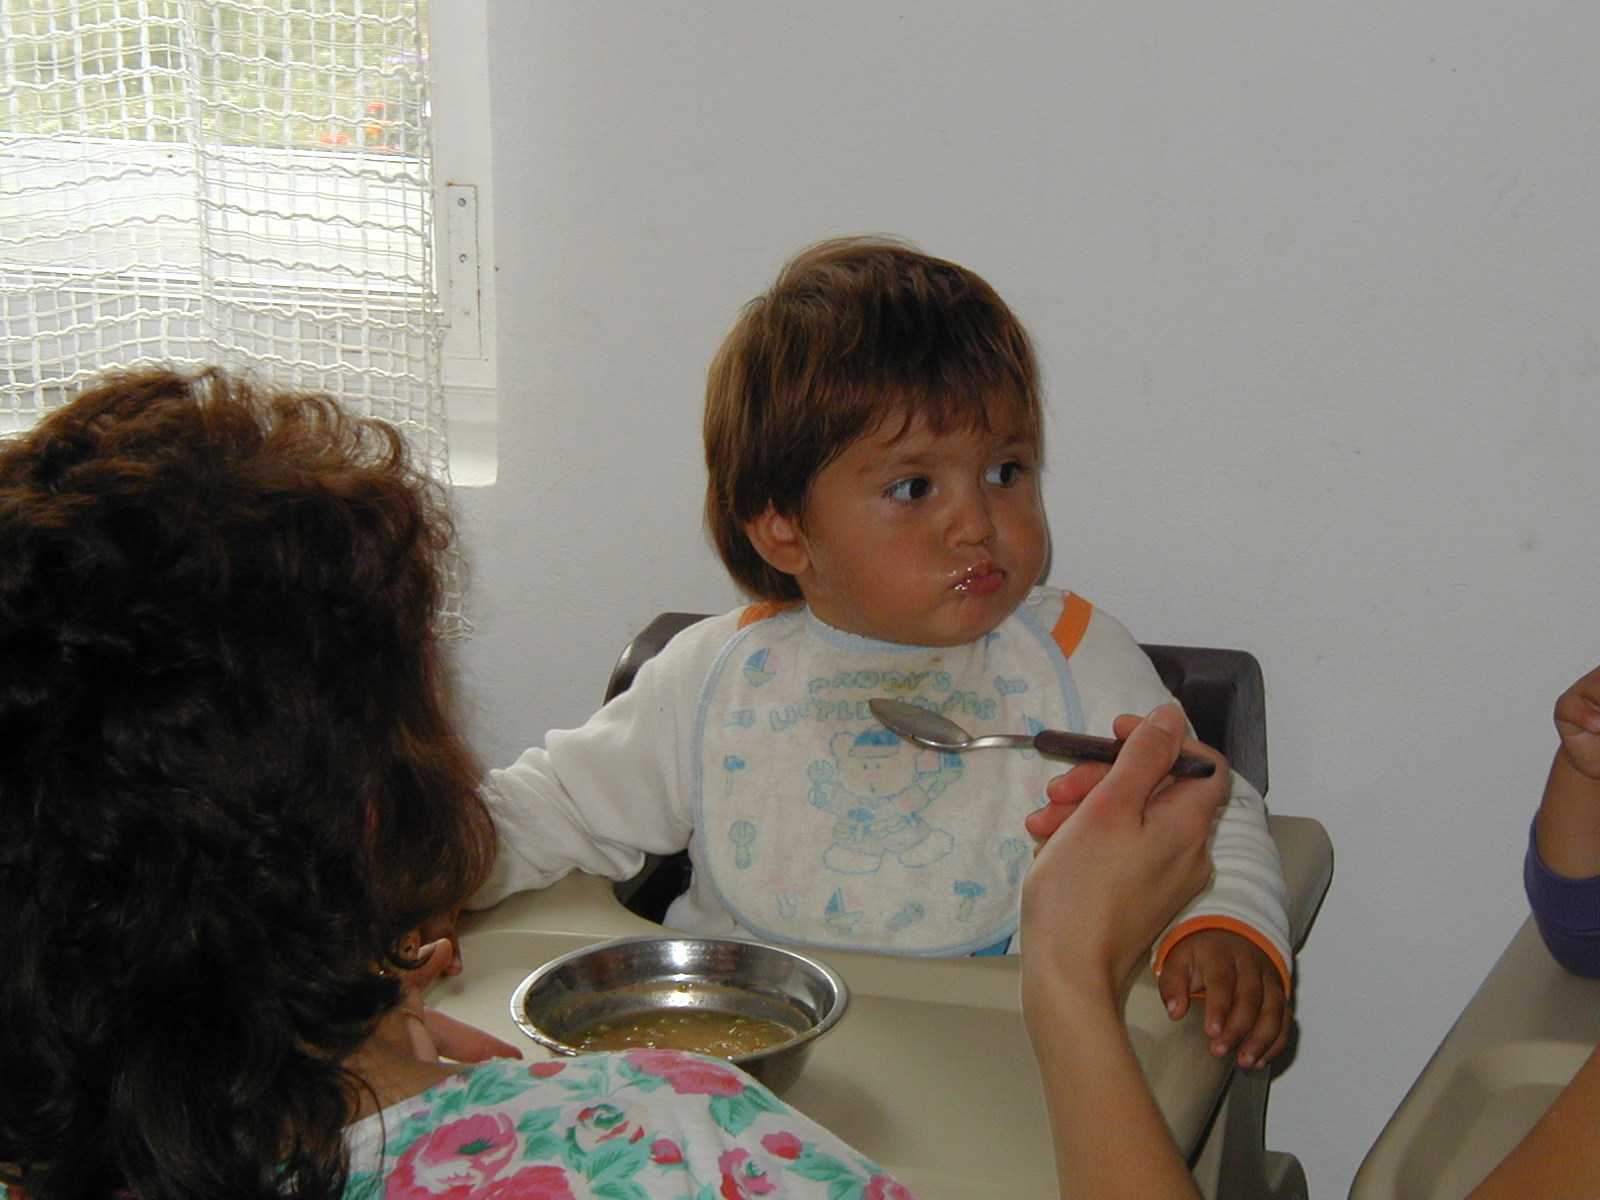 Feeding a baby at Bistritia.